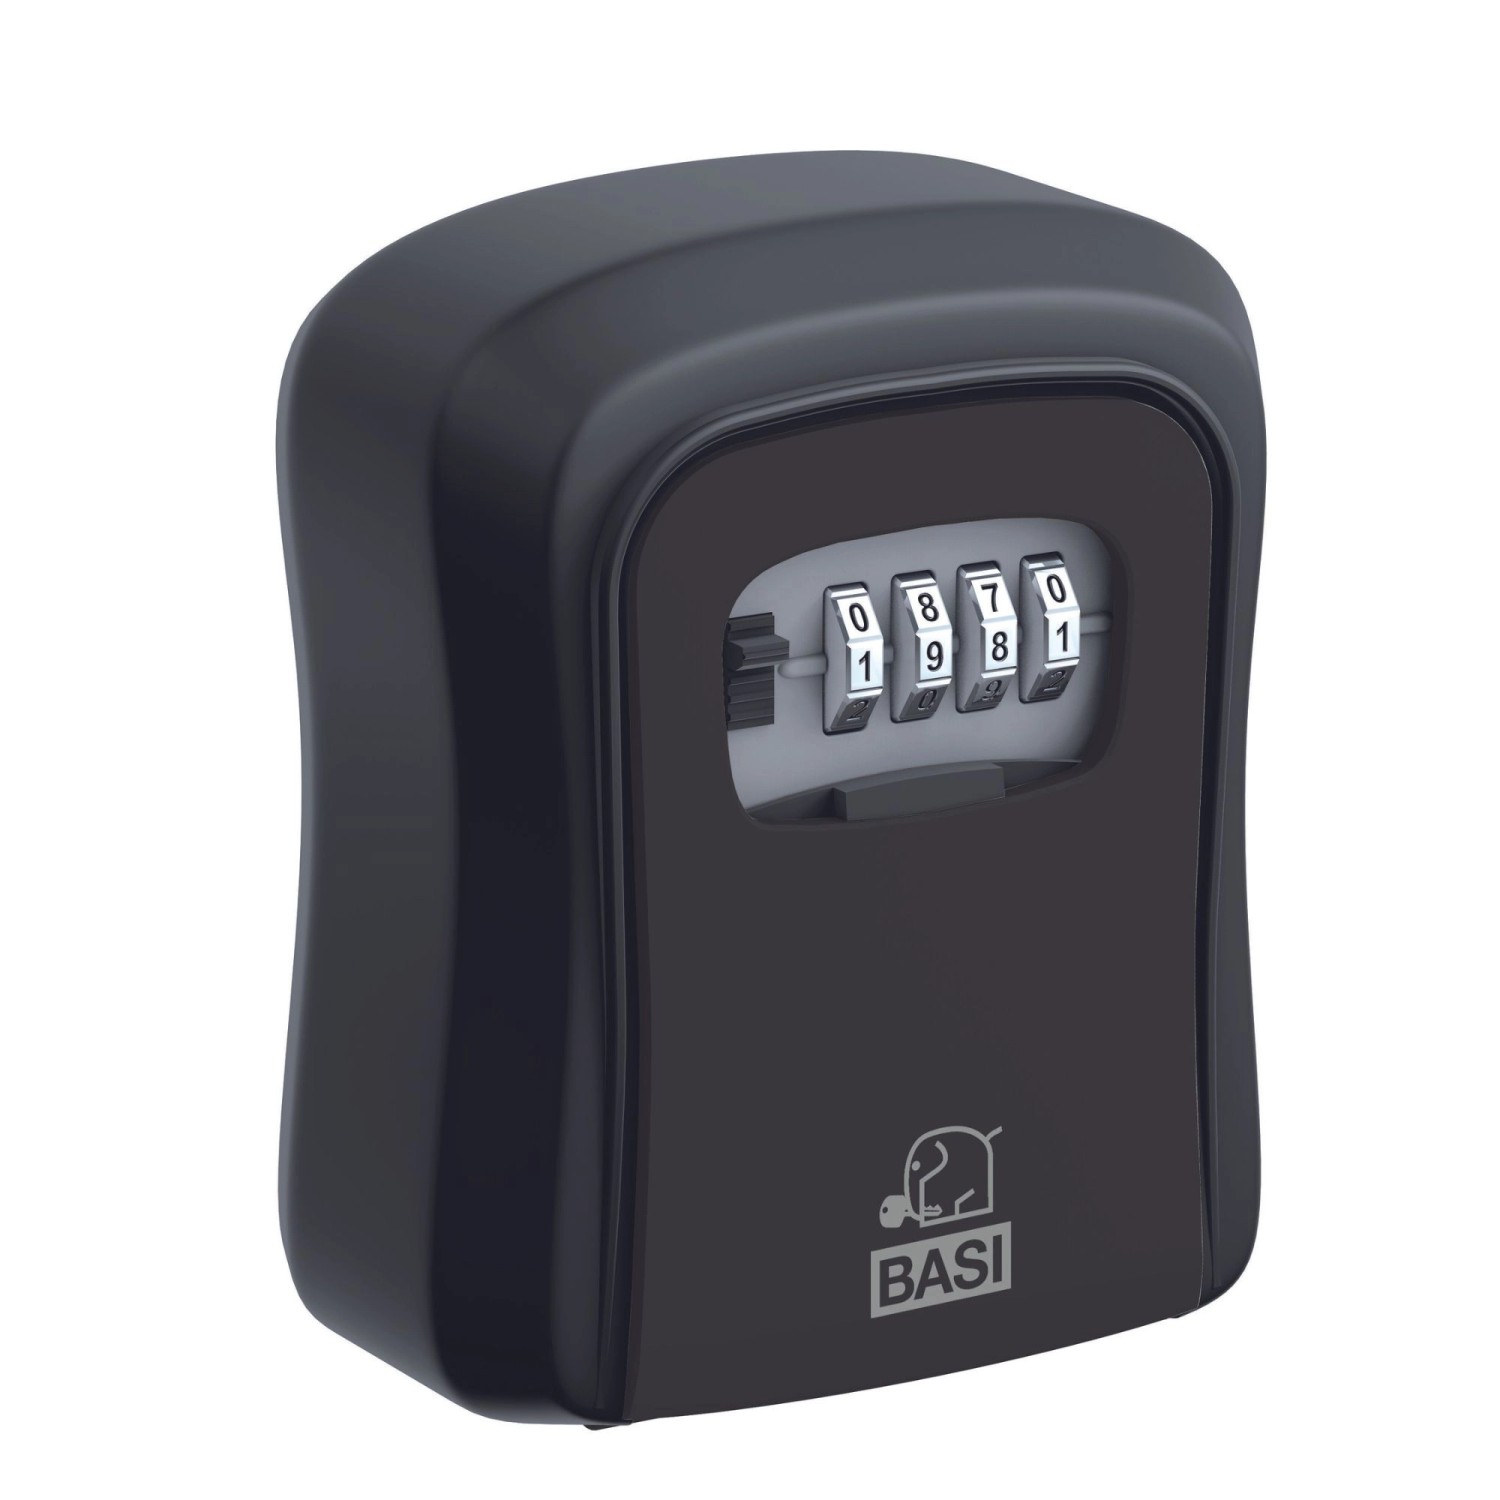 Basi - Schlüsselsafe - Schwarz - SSZ 200 - mit Zahlenschloss - Aluminium - 2101-0000-1100